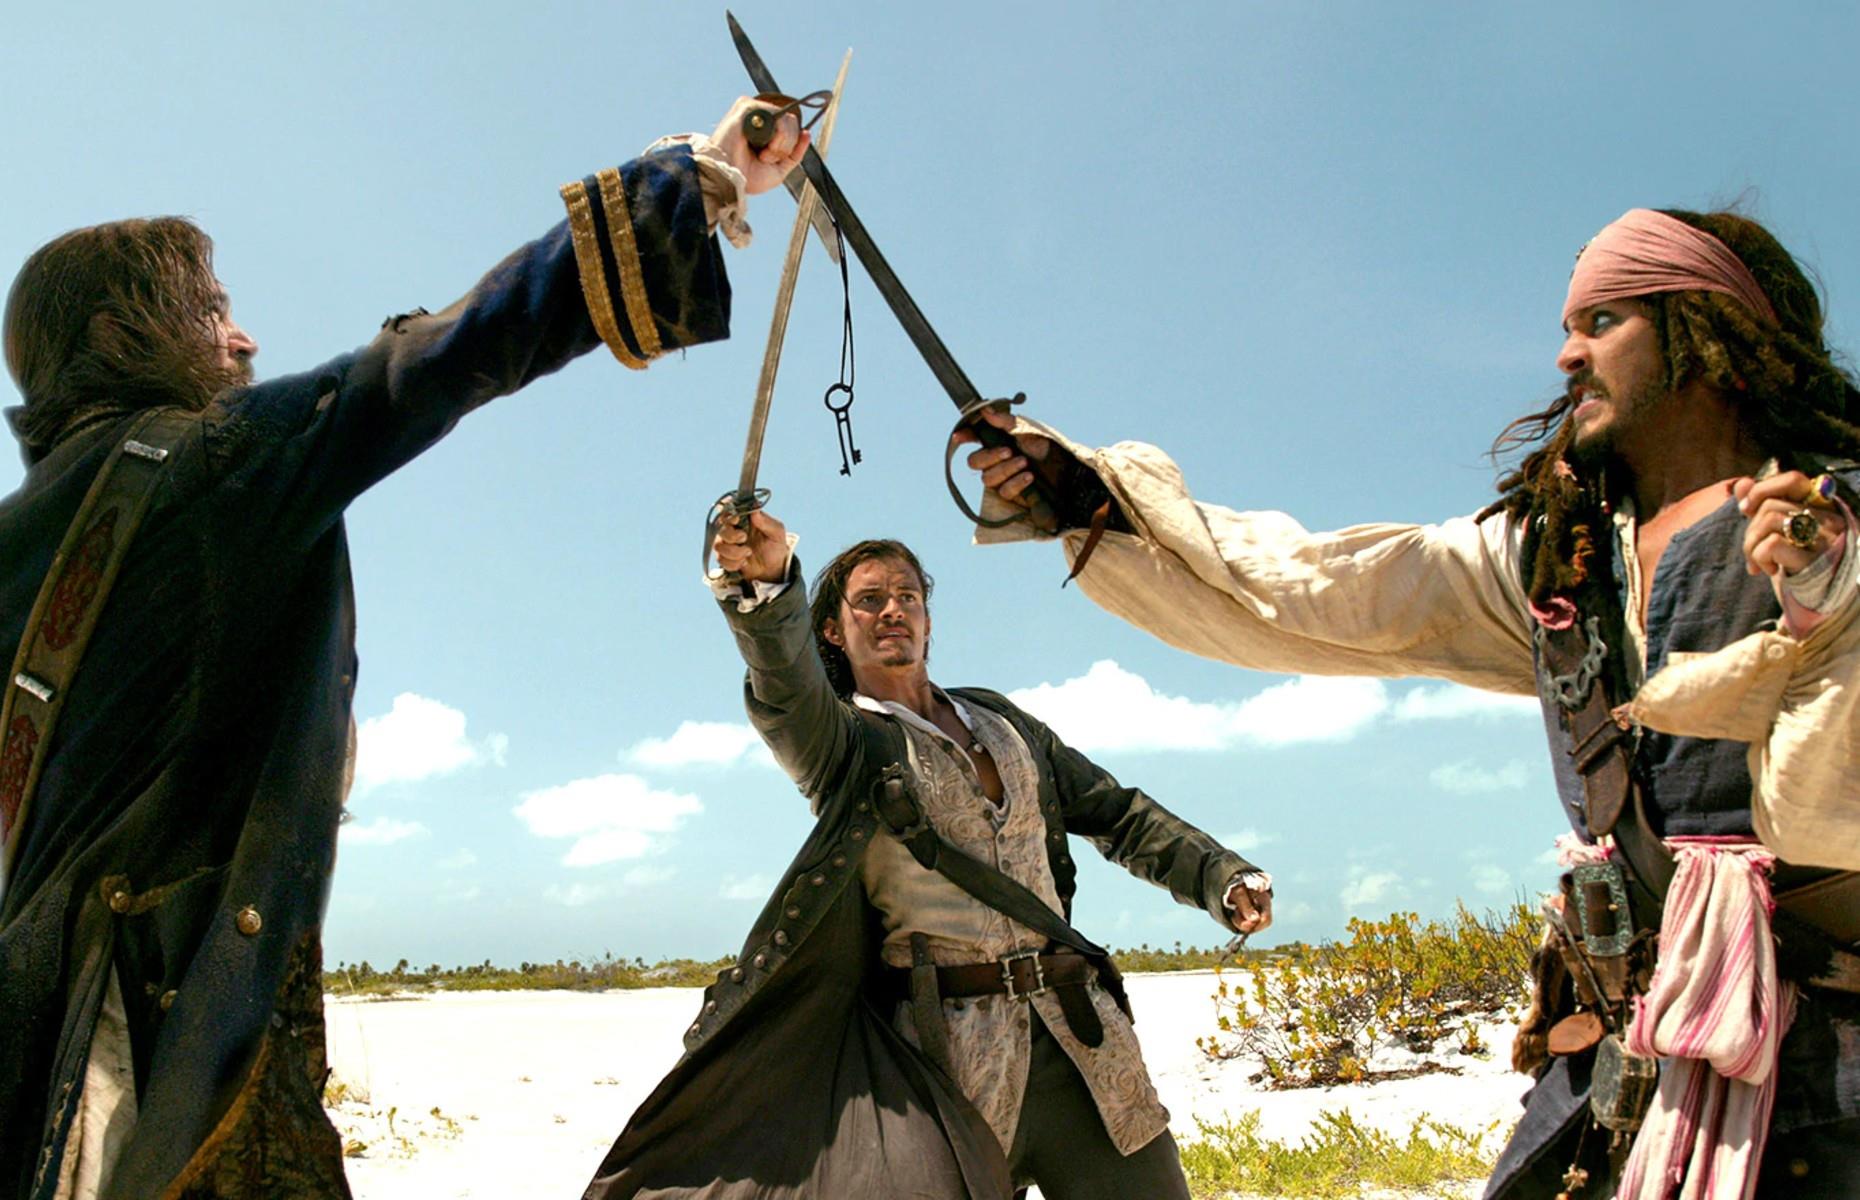 Joint 26th. Pirates of the Caribbean: Dead Man's Chest (2006) – cost: $225 million (£159m); profit: $875 million (£621m)